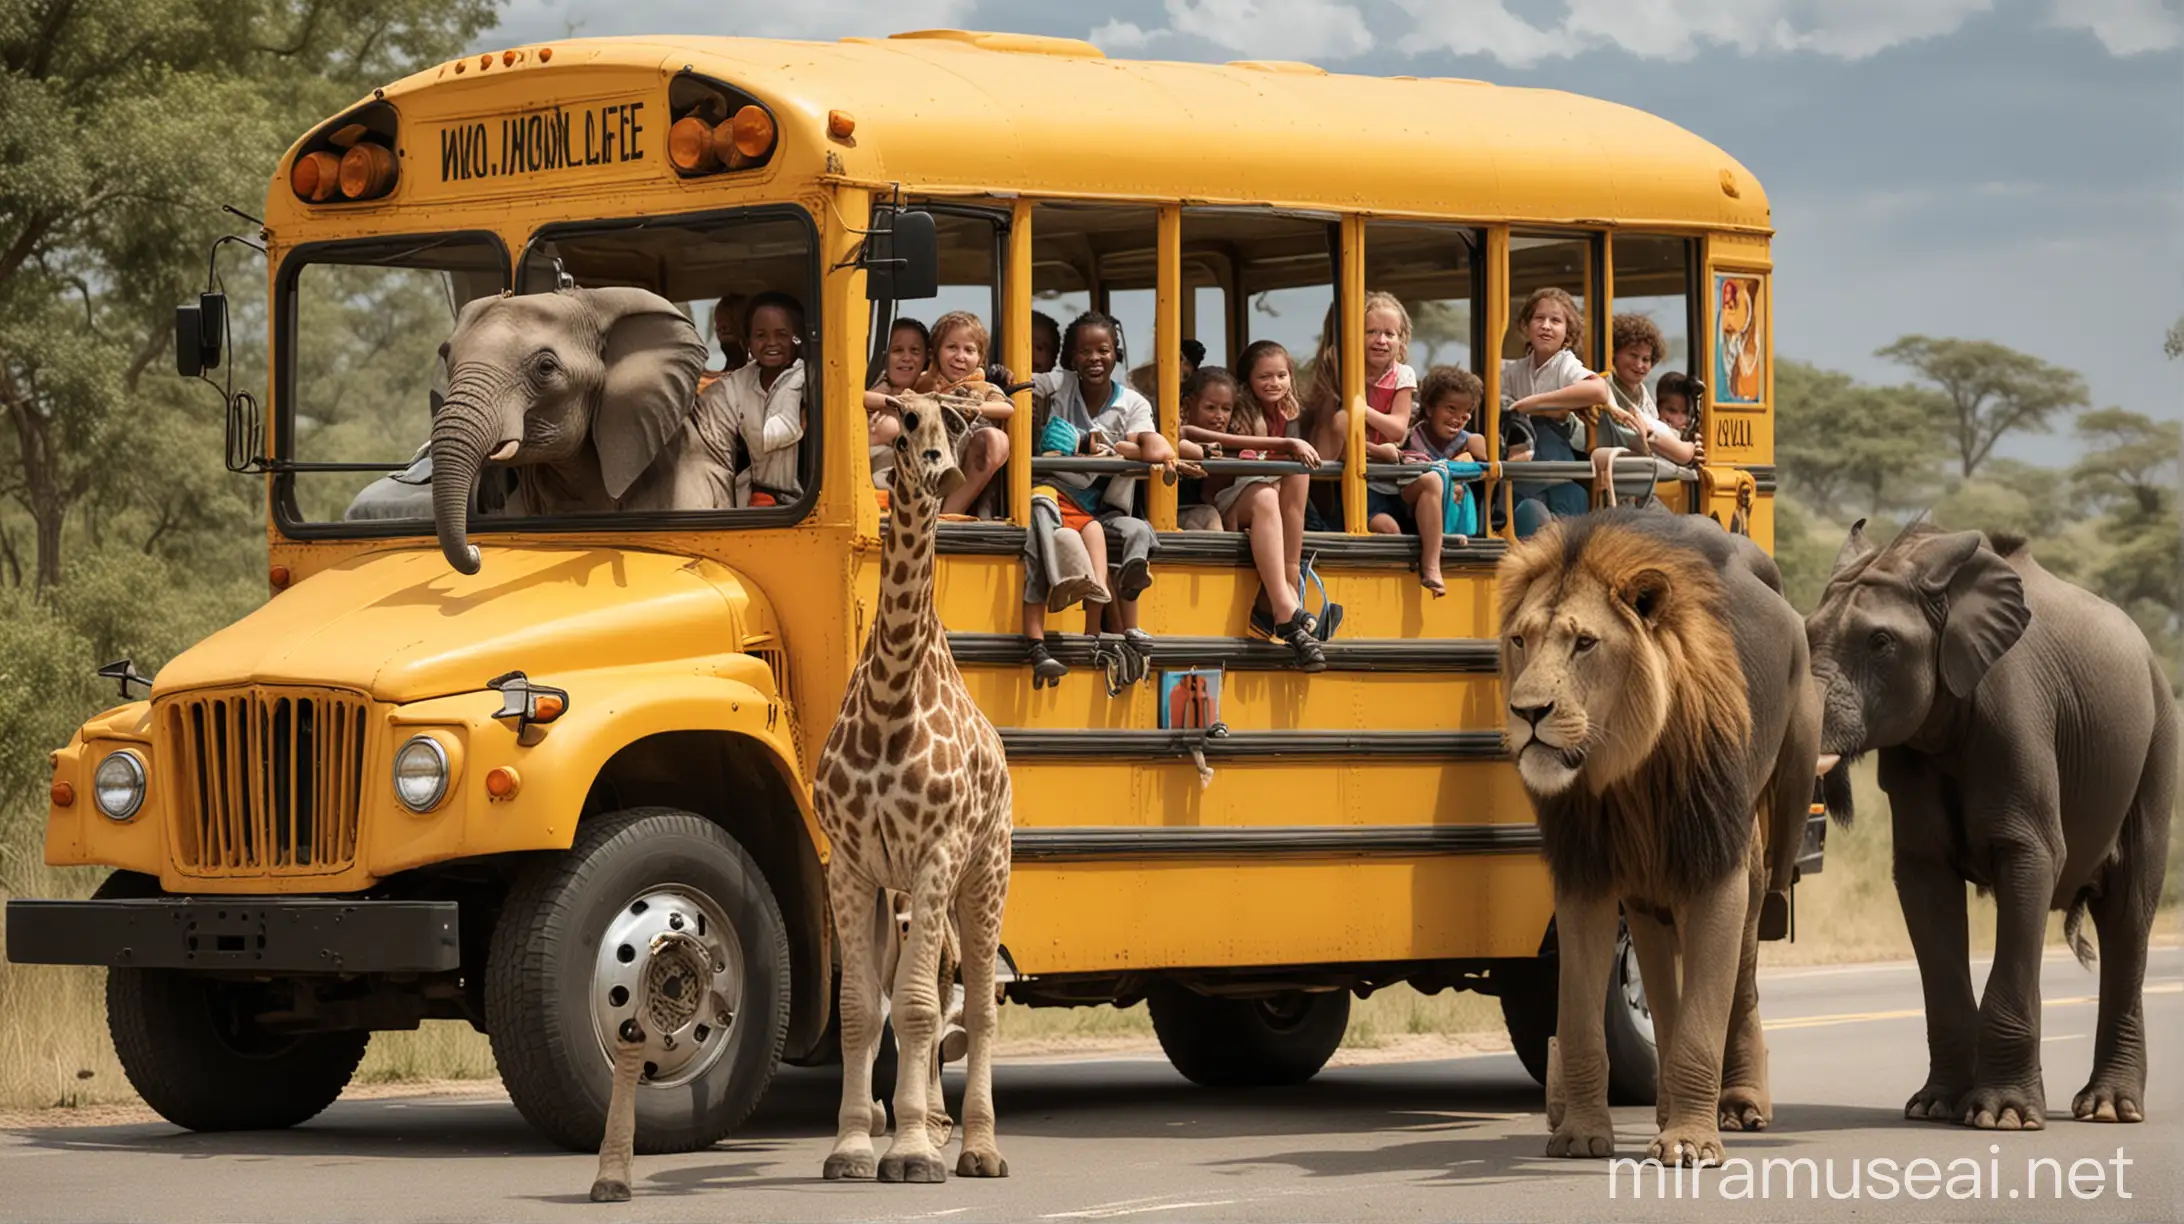 Imagine a world life safari with an elephant, a giraffe, a gorilla, and a lion all on a school bus.